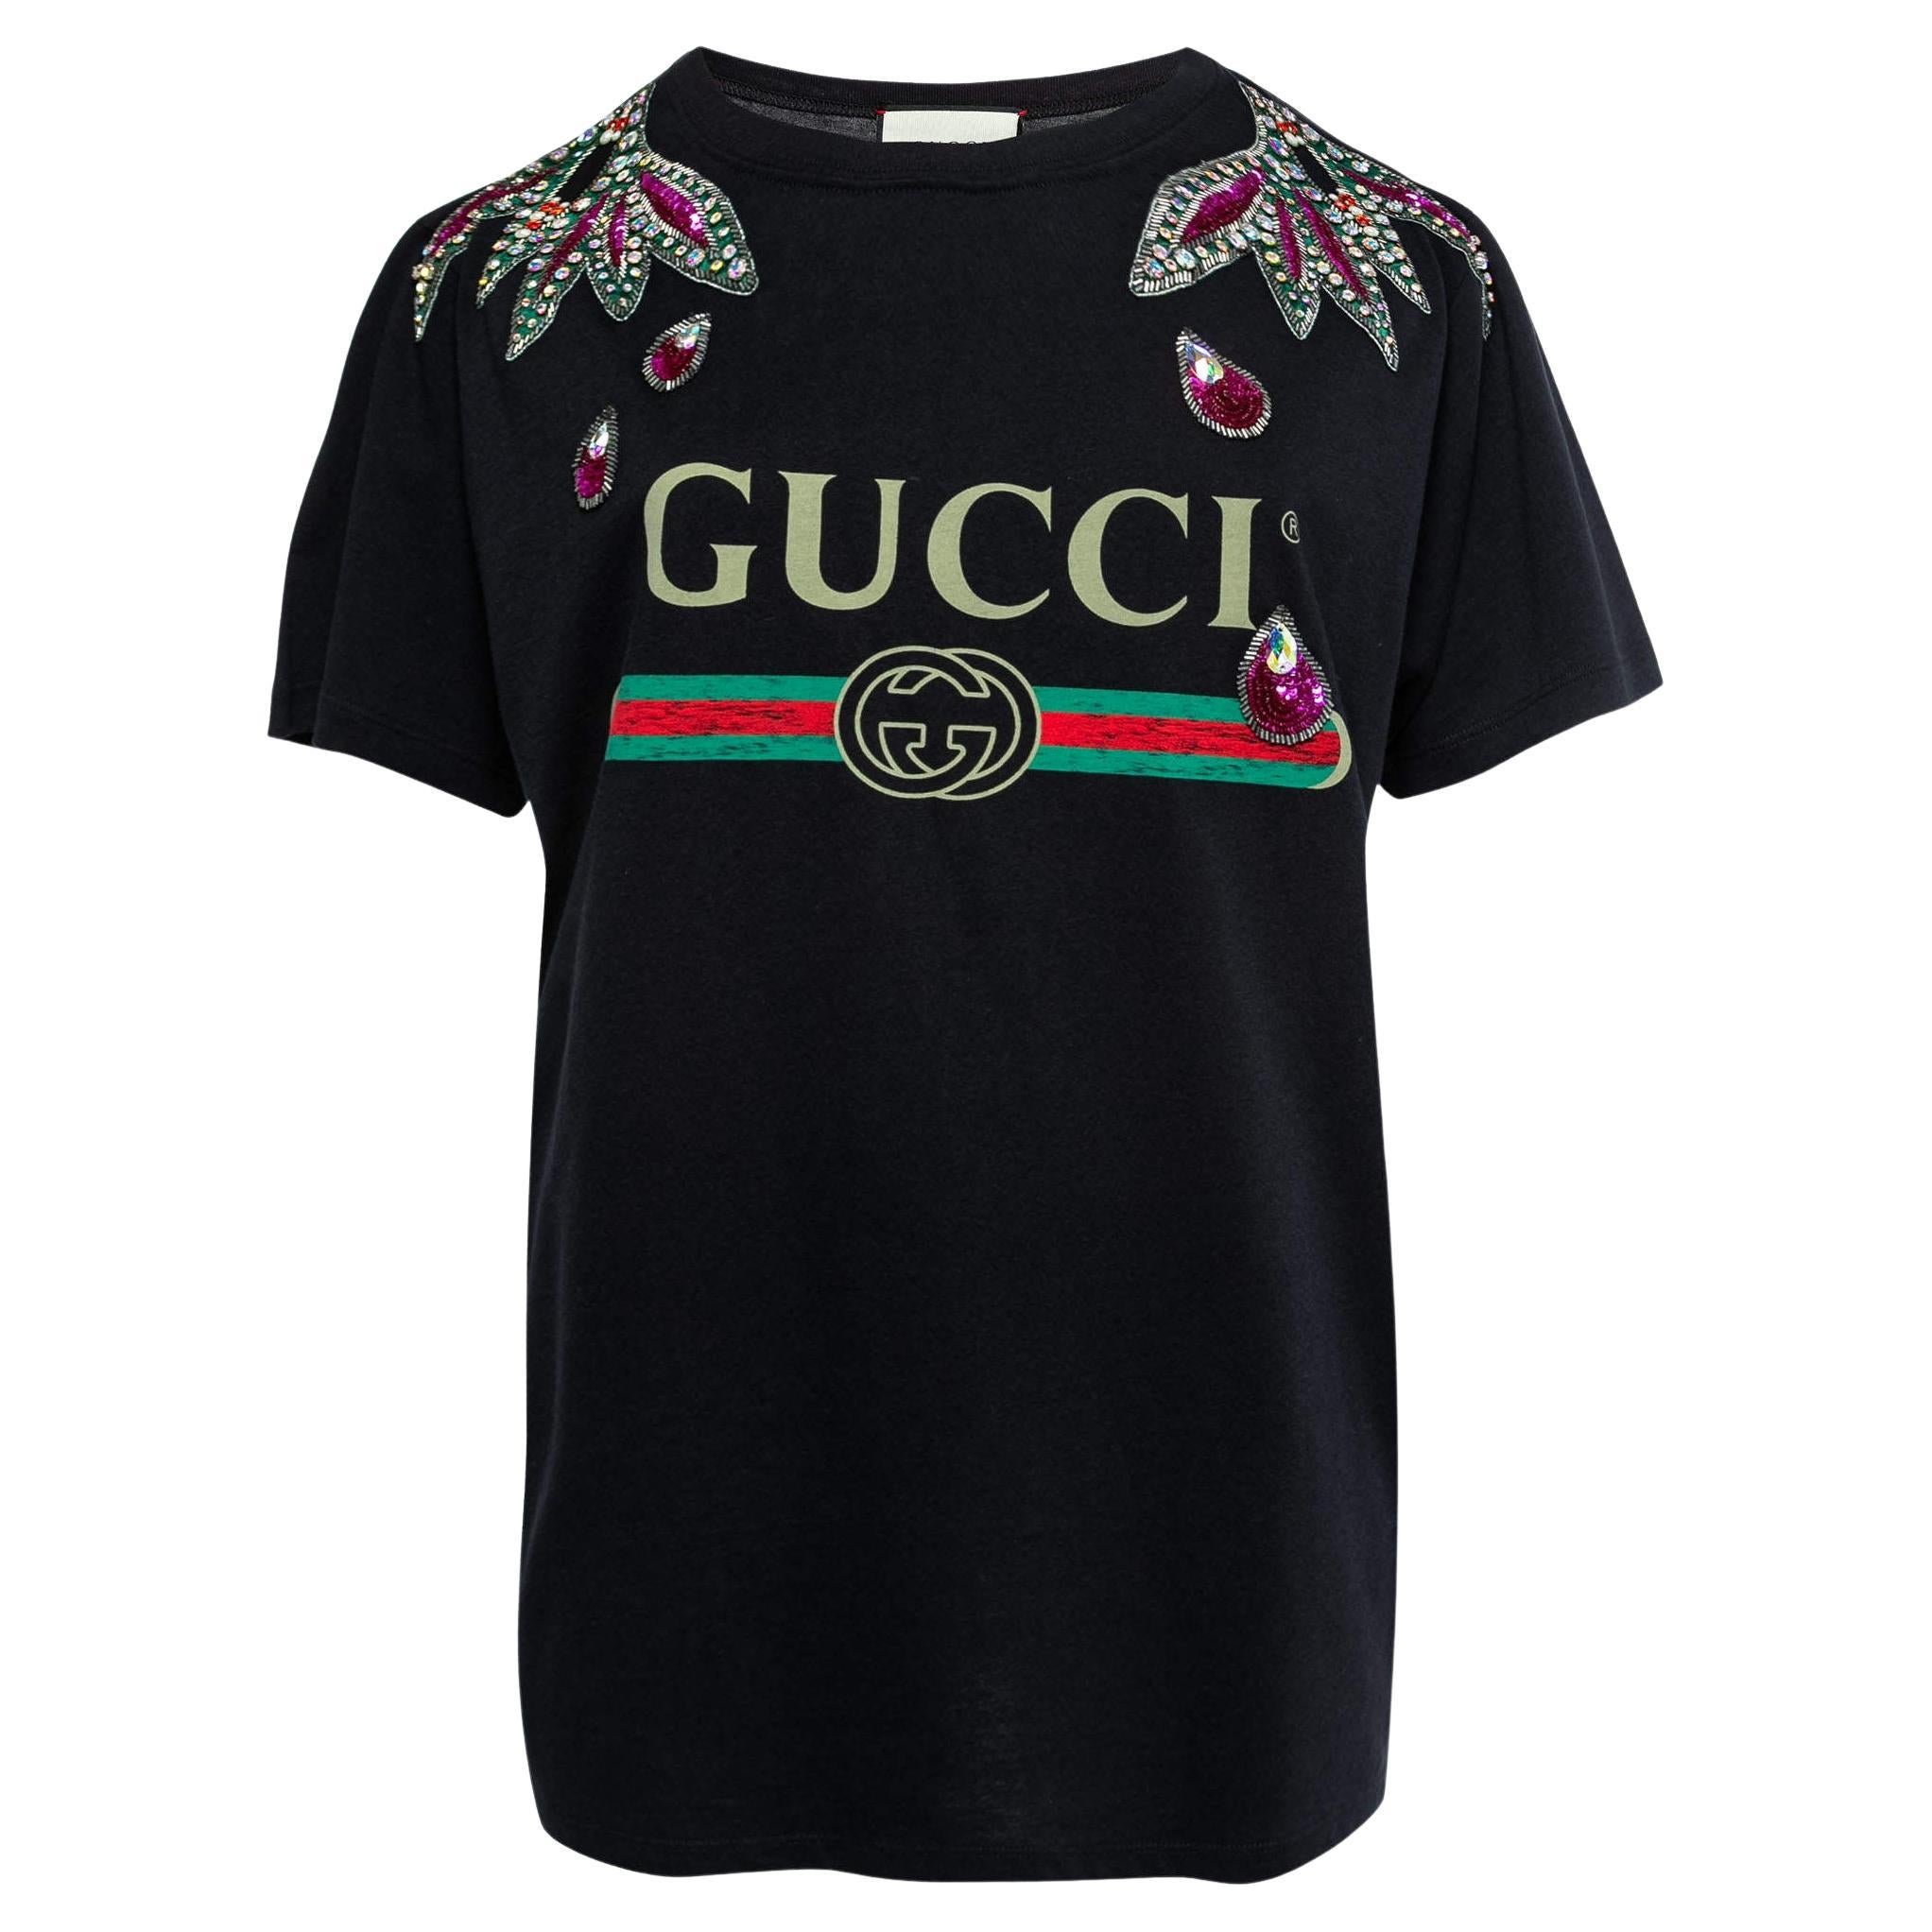 Gucci Black Cotton Logo Print Embellished T-Shirt S